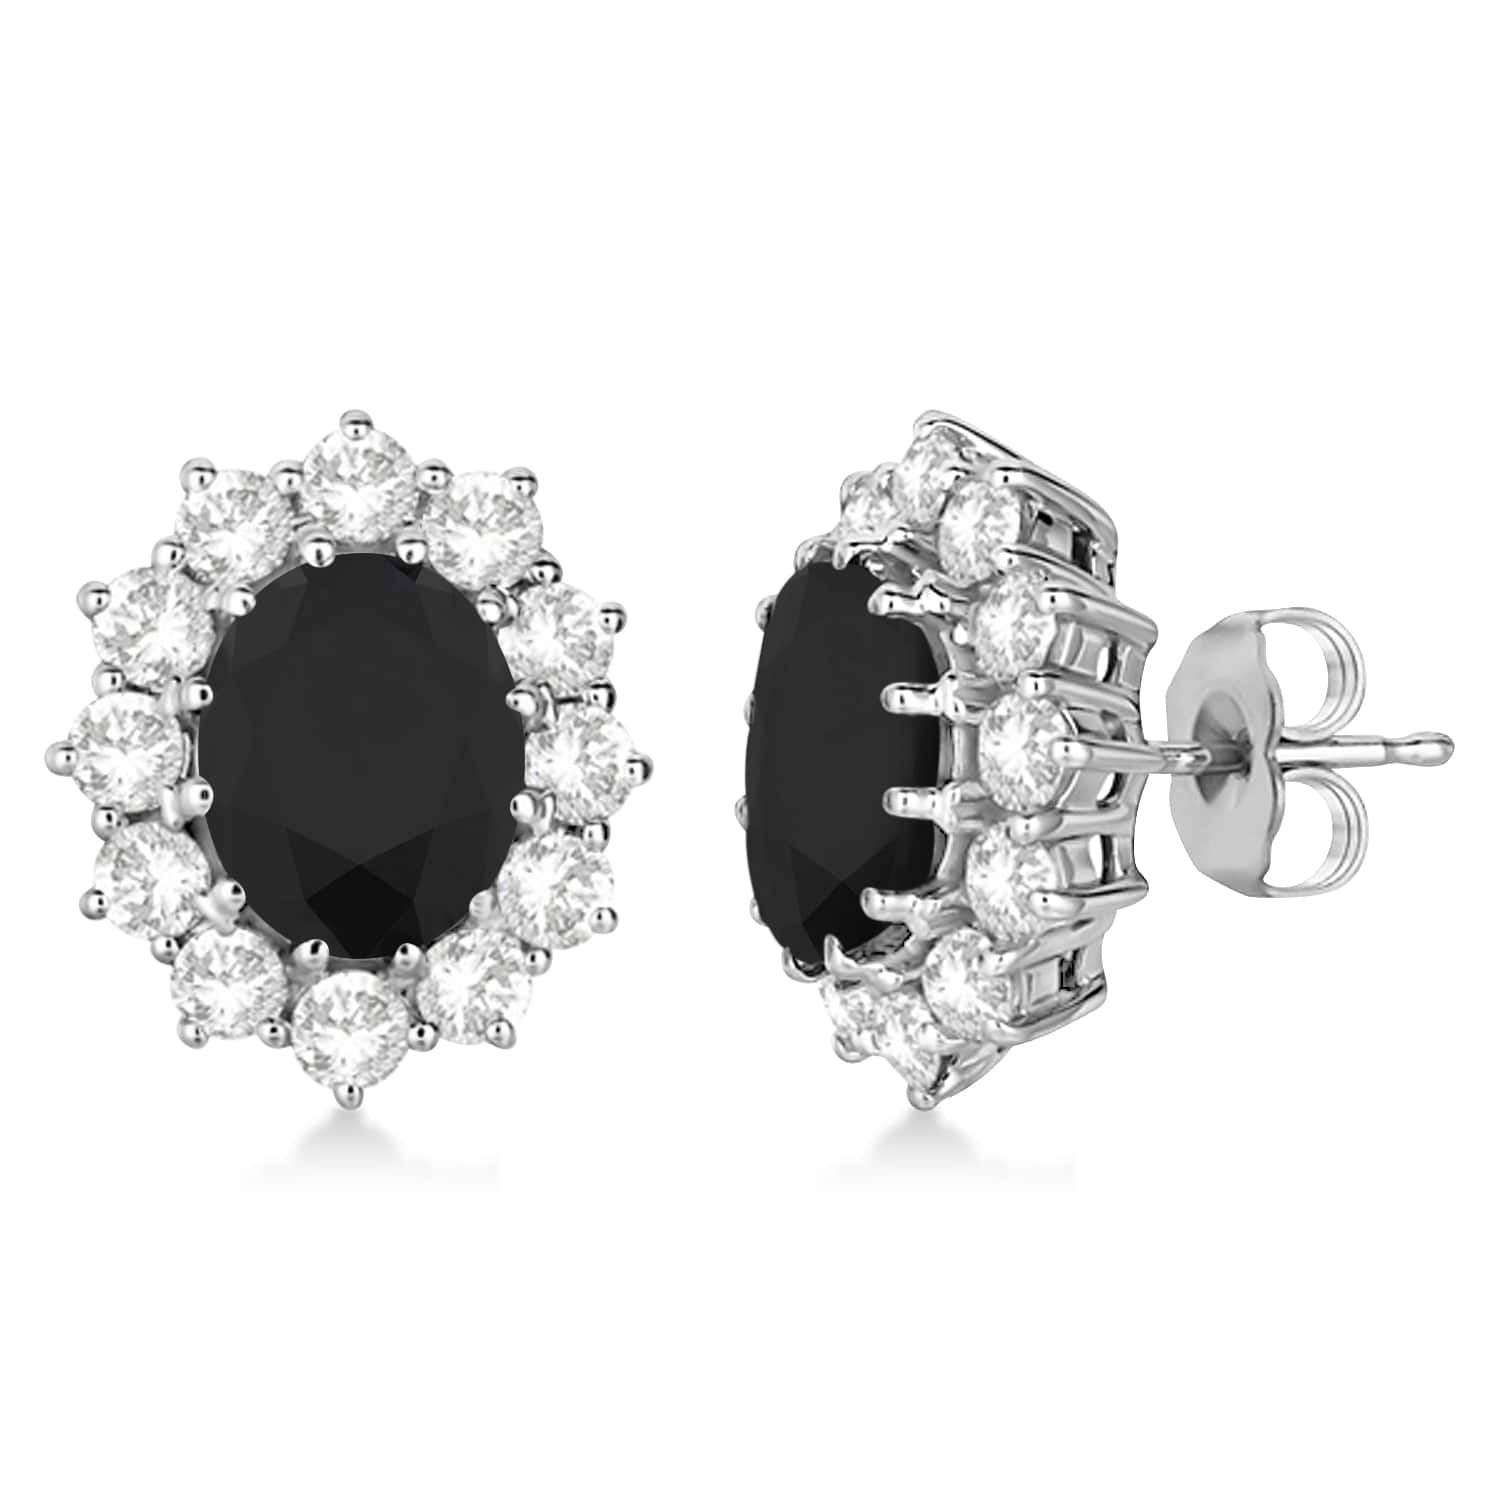 Oval Black and White Diamond Earrings 14k White Gold (5.55ctw)